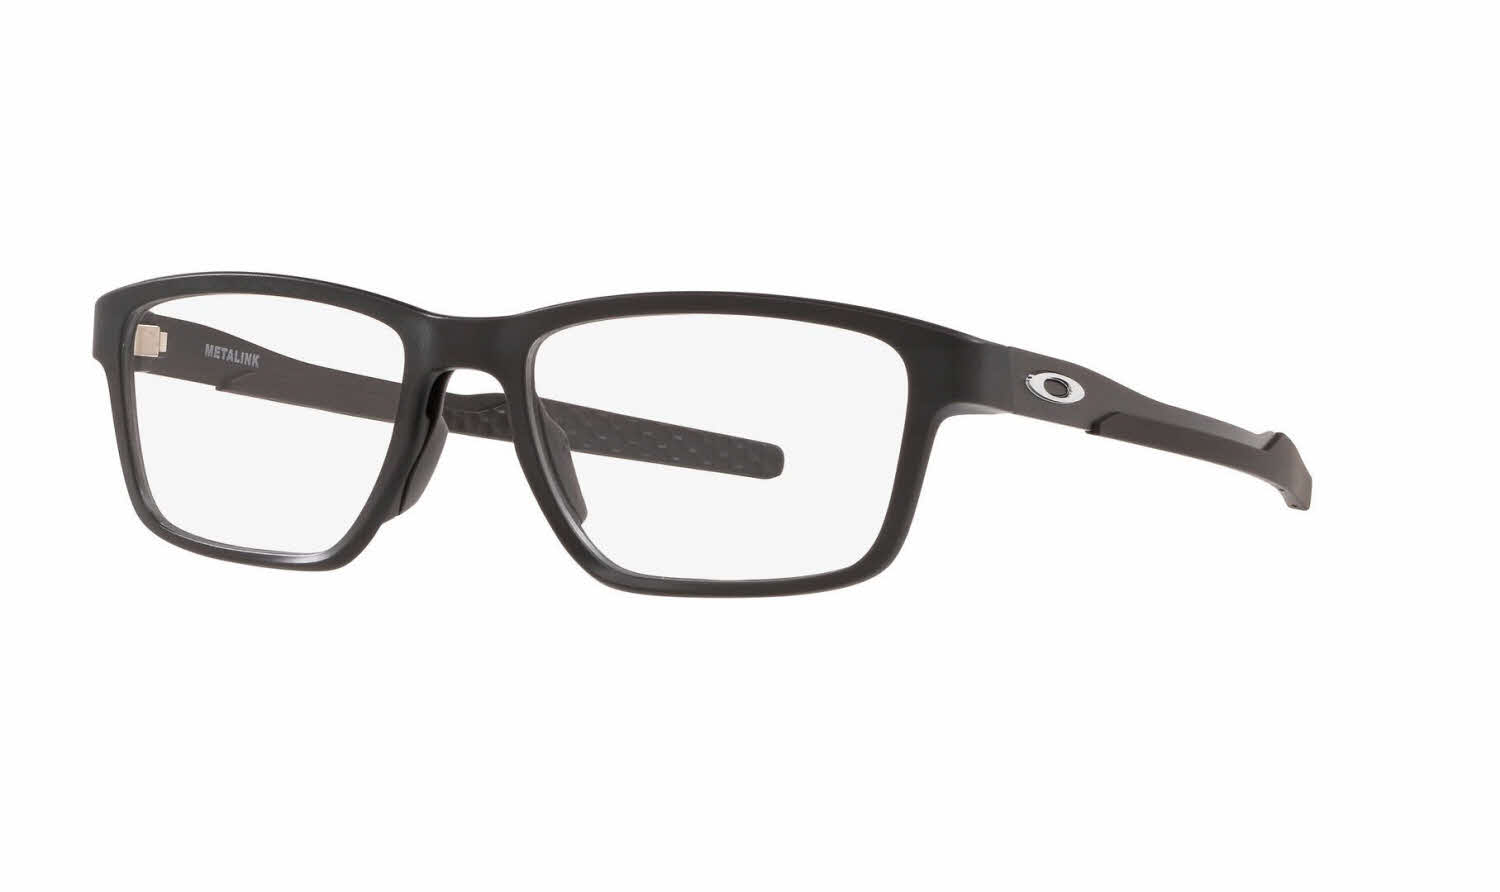 oakley progressive reading glasses